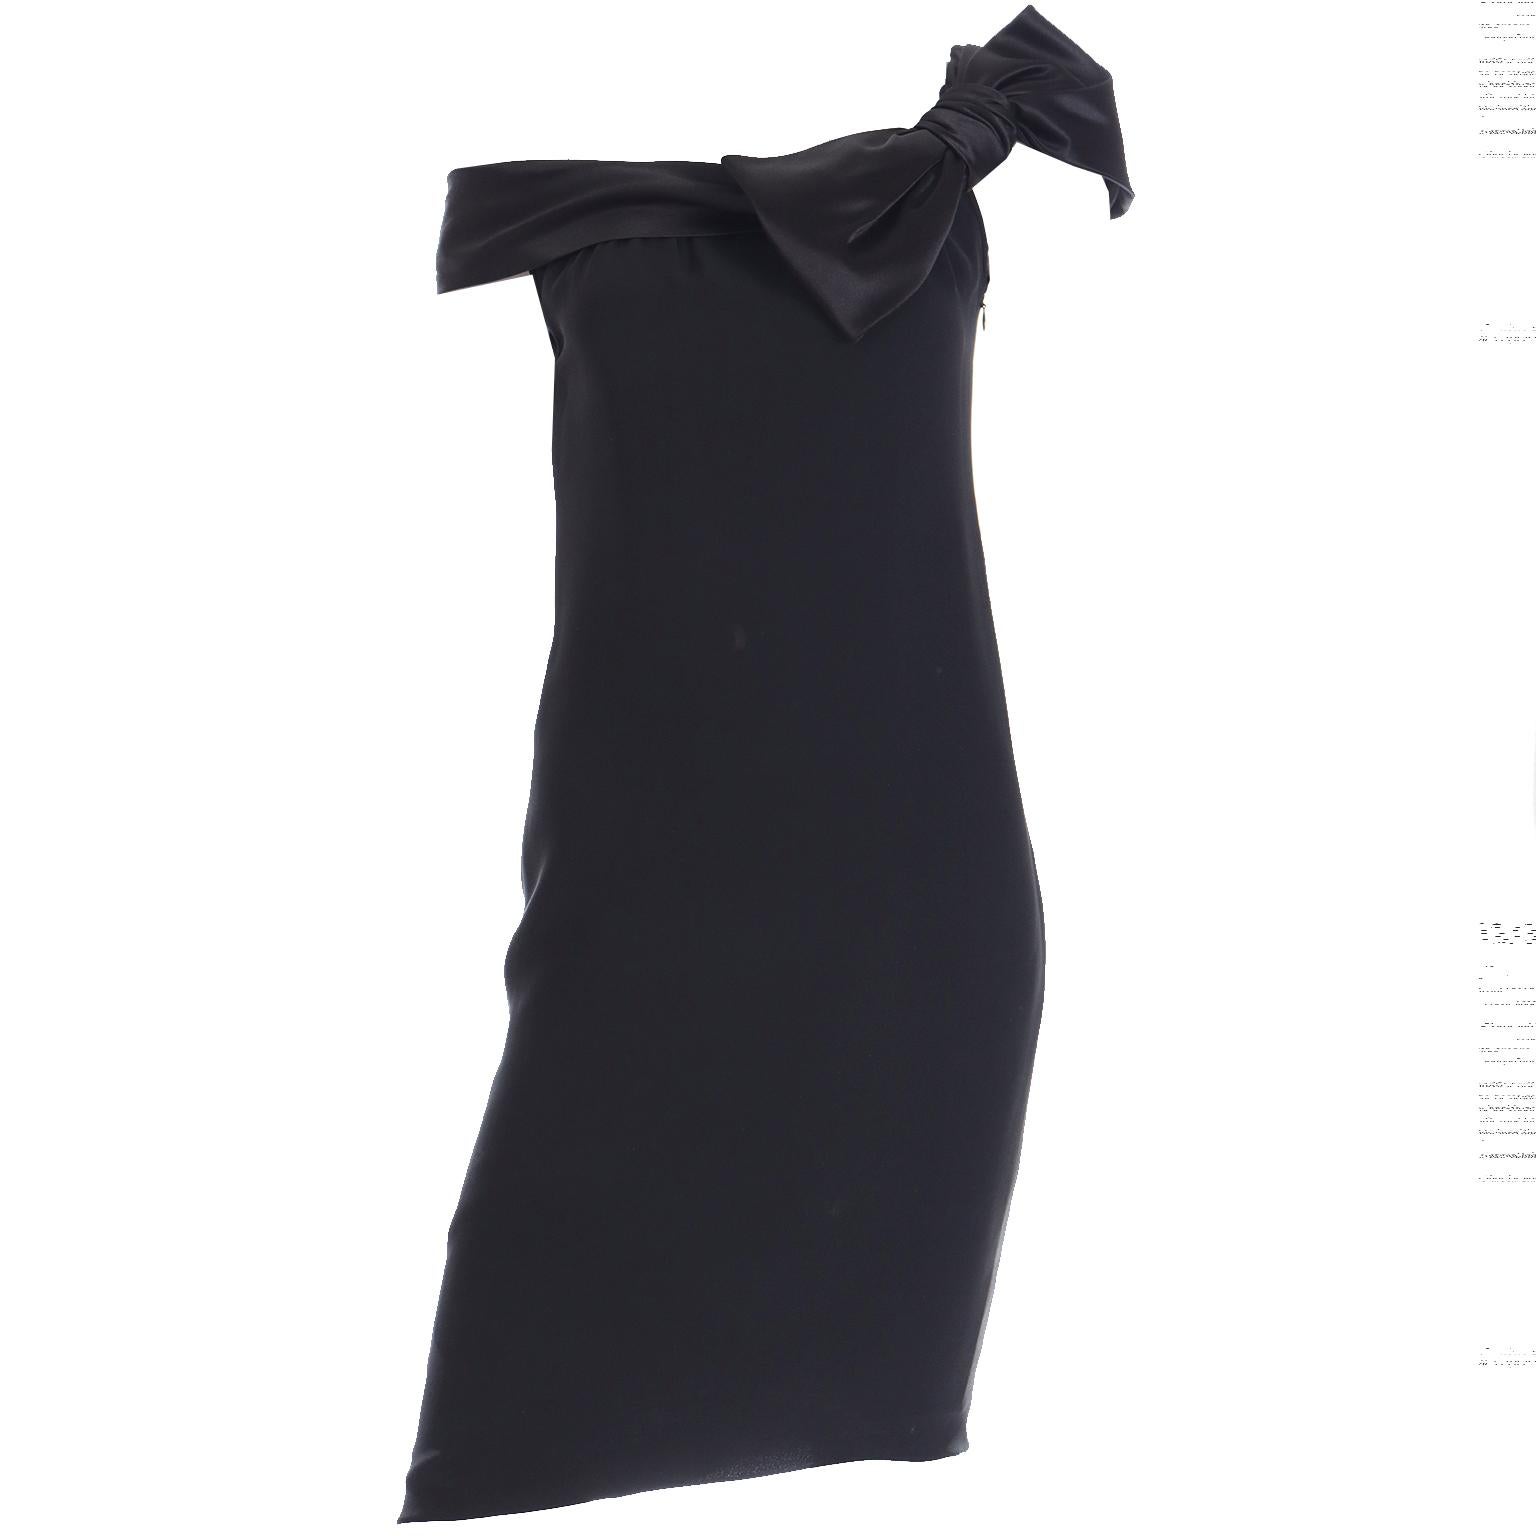 Valentino Garavani 2008 Documented Black Silk Crepe Evening Dress w Satin Bow For Sale 5